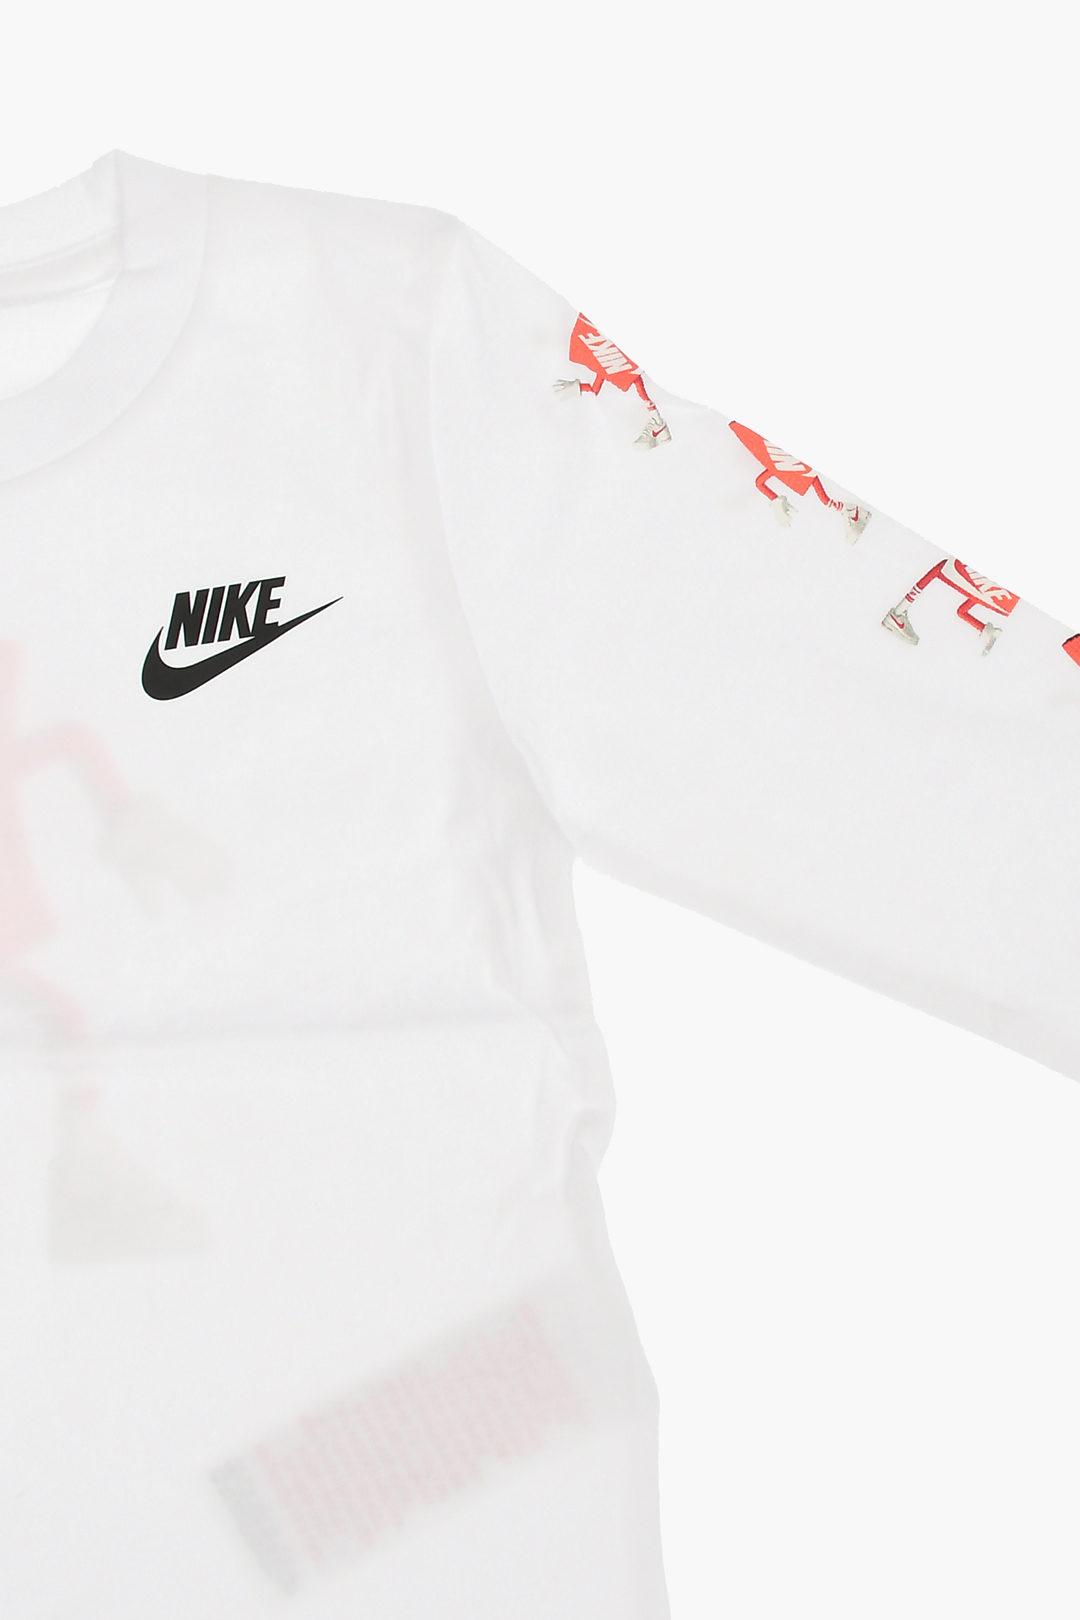 Nike KIDS long sleeve DANCE t-shirt boys Glamood